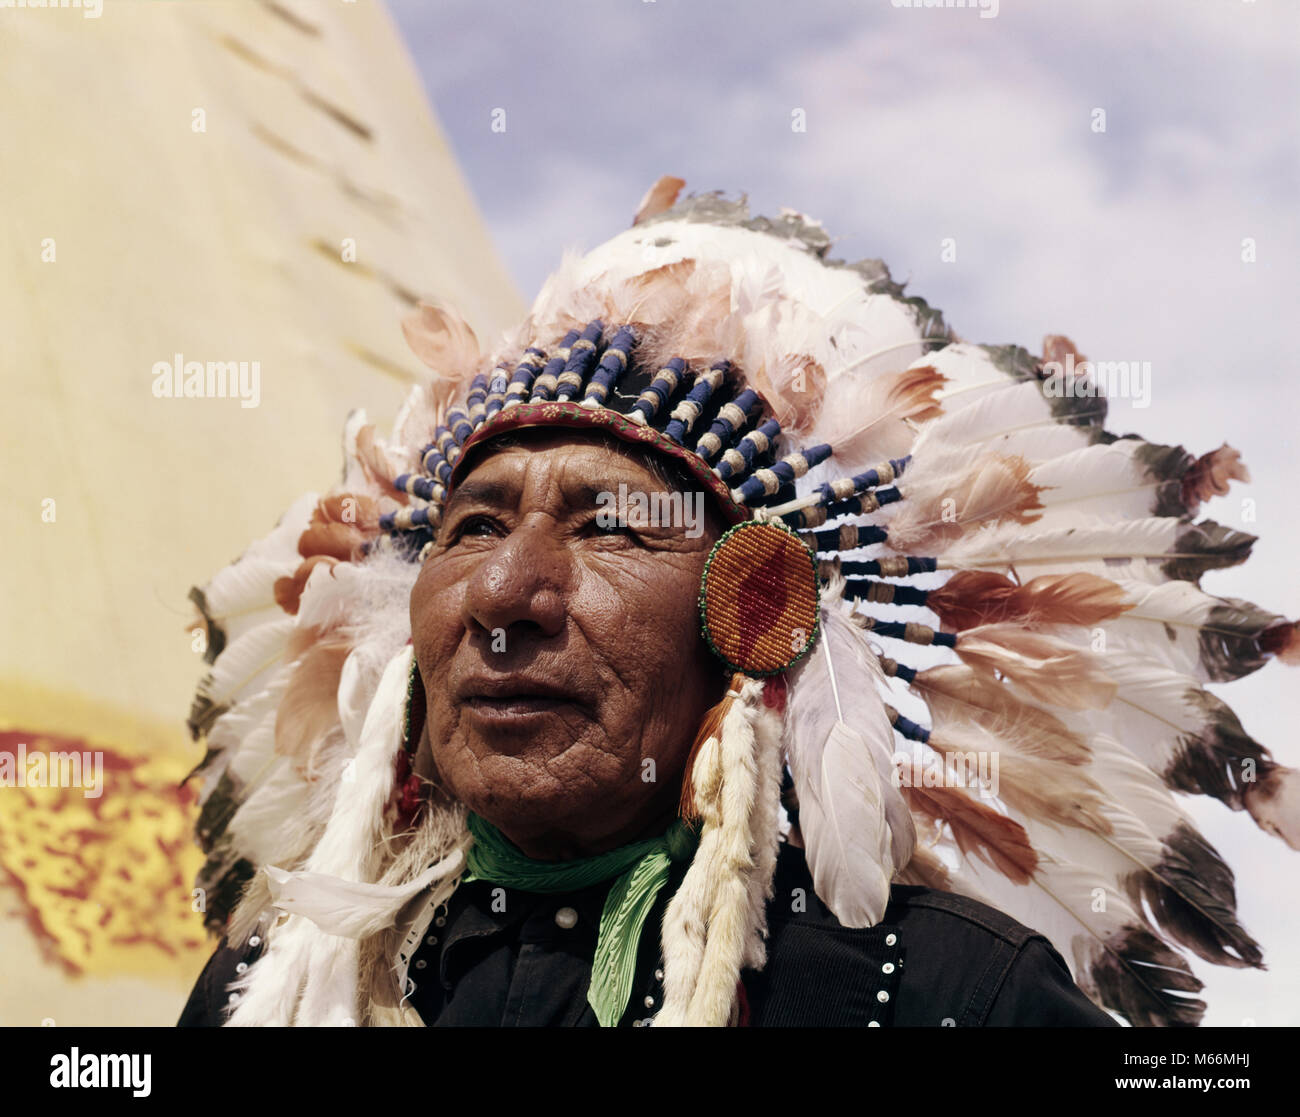 1960s-native-american-indian-man-chief-gull-wearing-feather-bonnet-M66MHJ.jpg